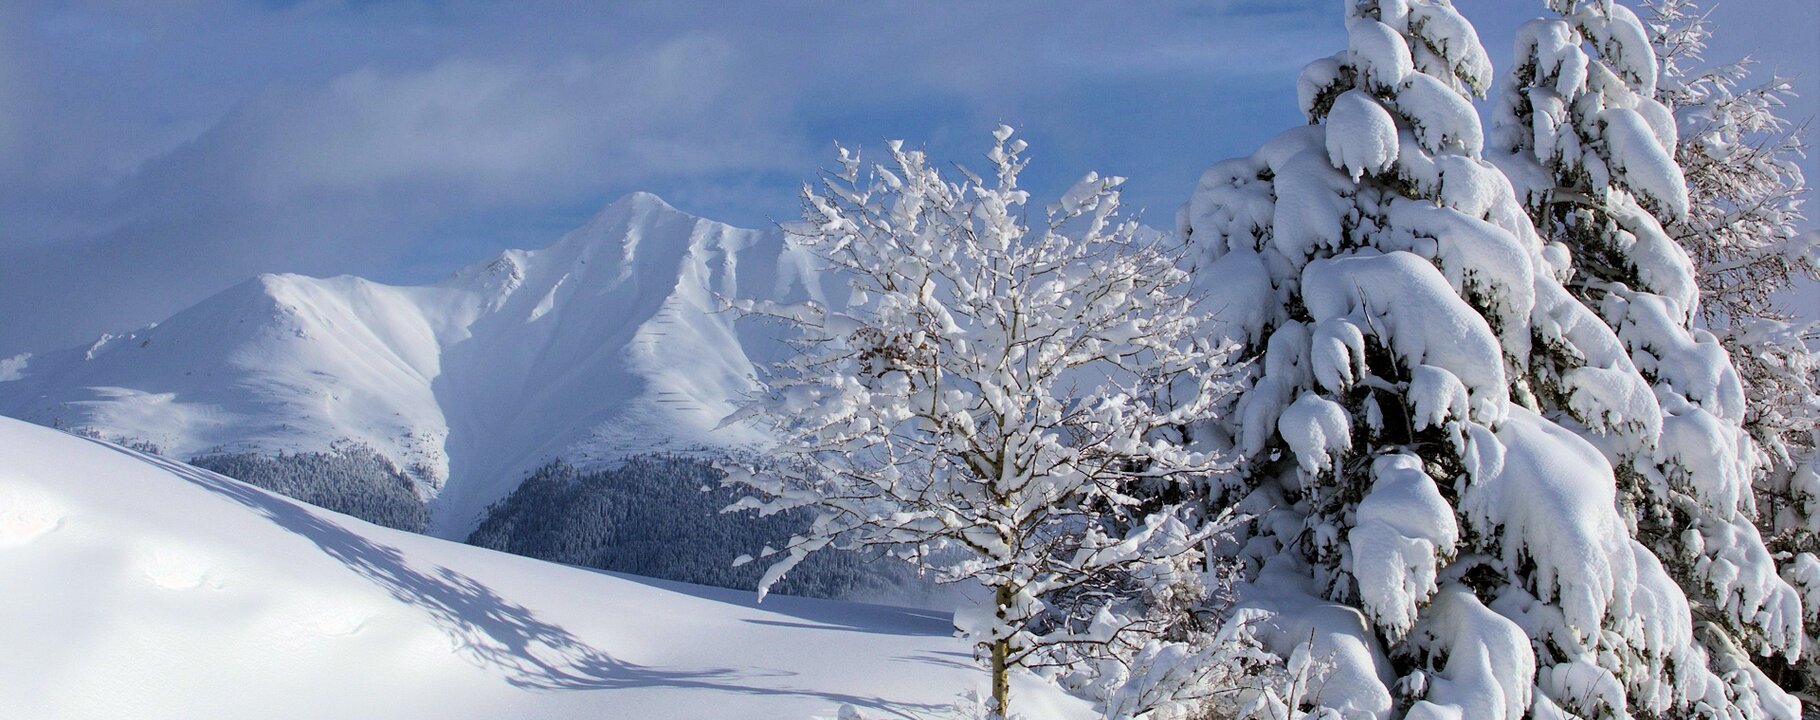 snow-covered winter landscape in Serfaus-Fiss-Ladis | © Serfaus-Fiss-Ladis/Tirol